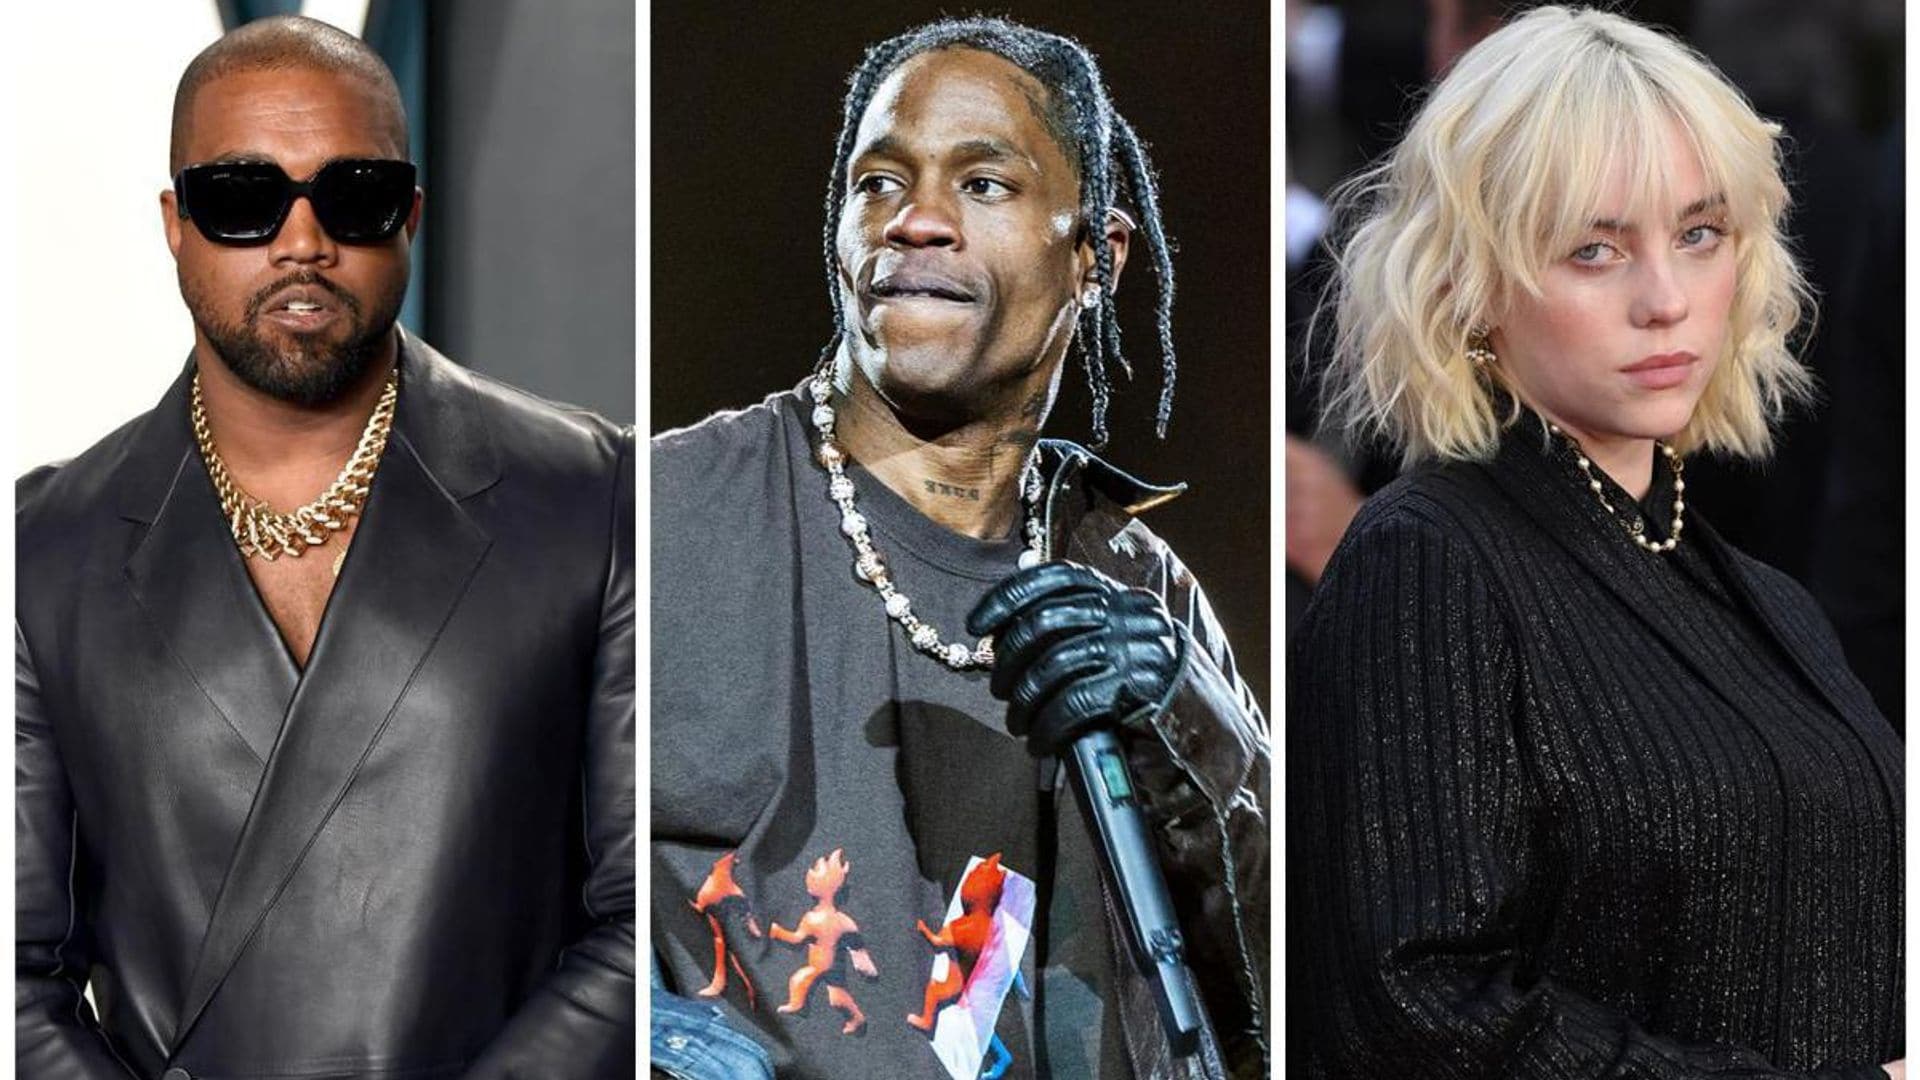 Kanye West won't perform at Coachella unless Billie Eilish apologizes to Travis Scott